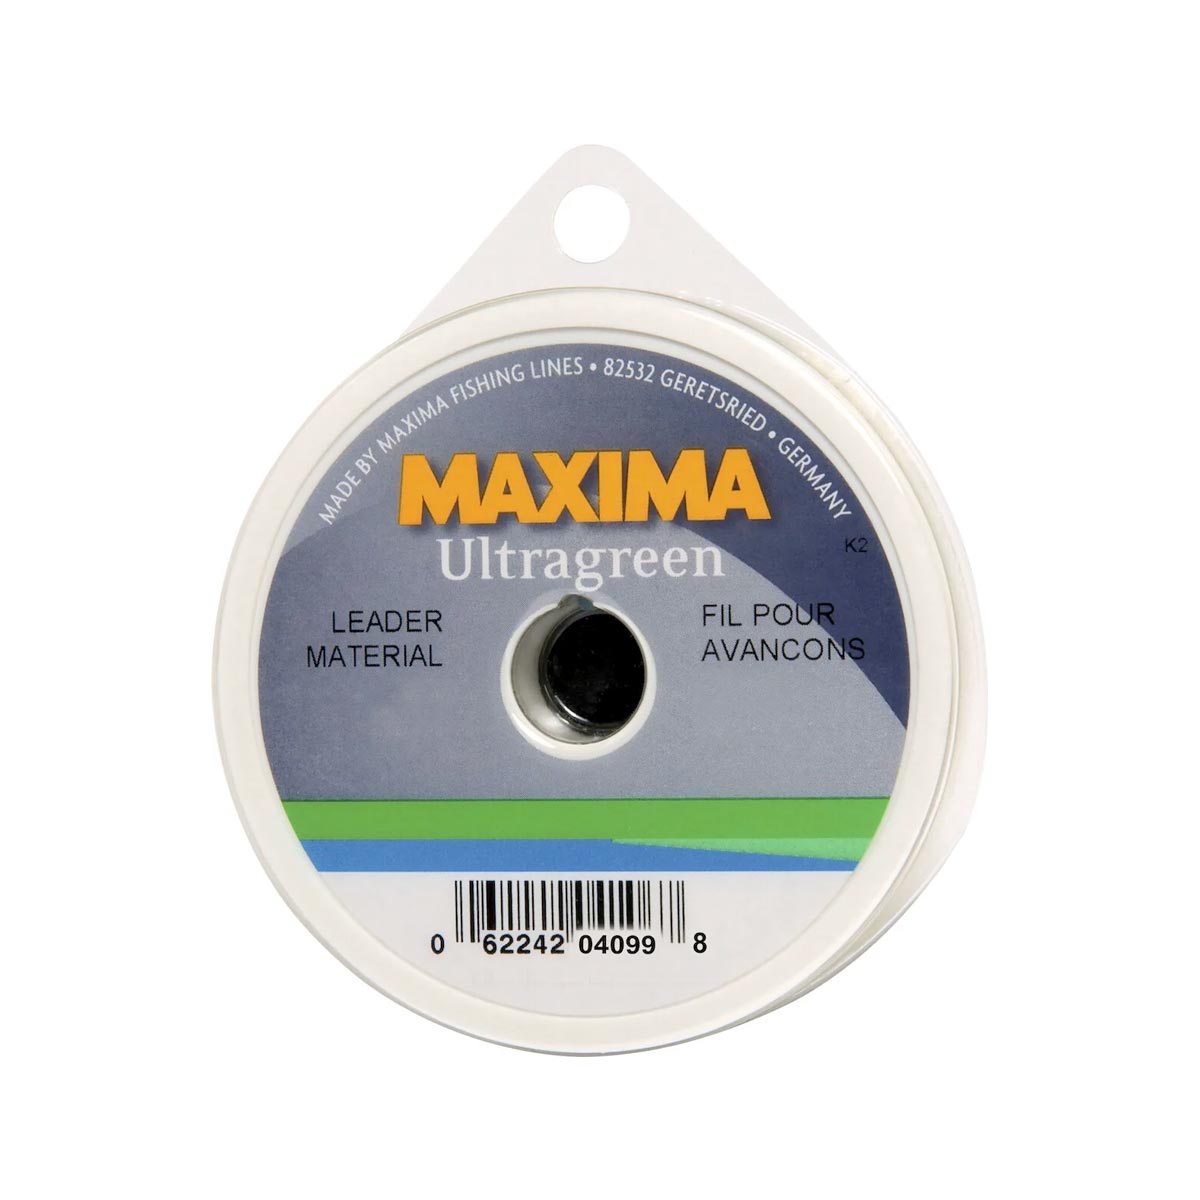 Maxima SharkTooth Line Management System, 42% OFF